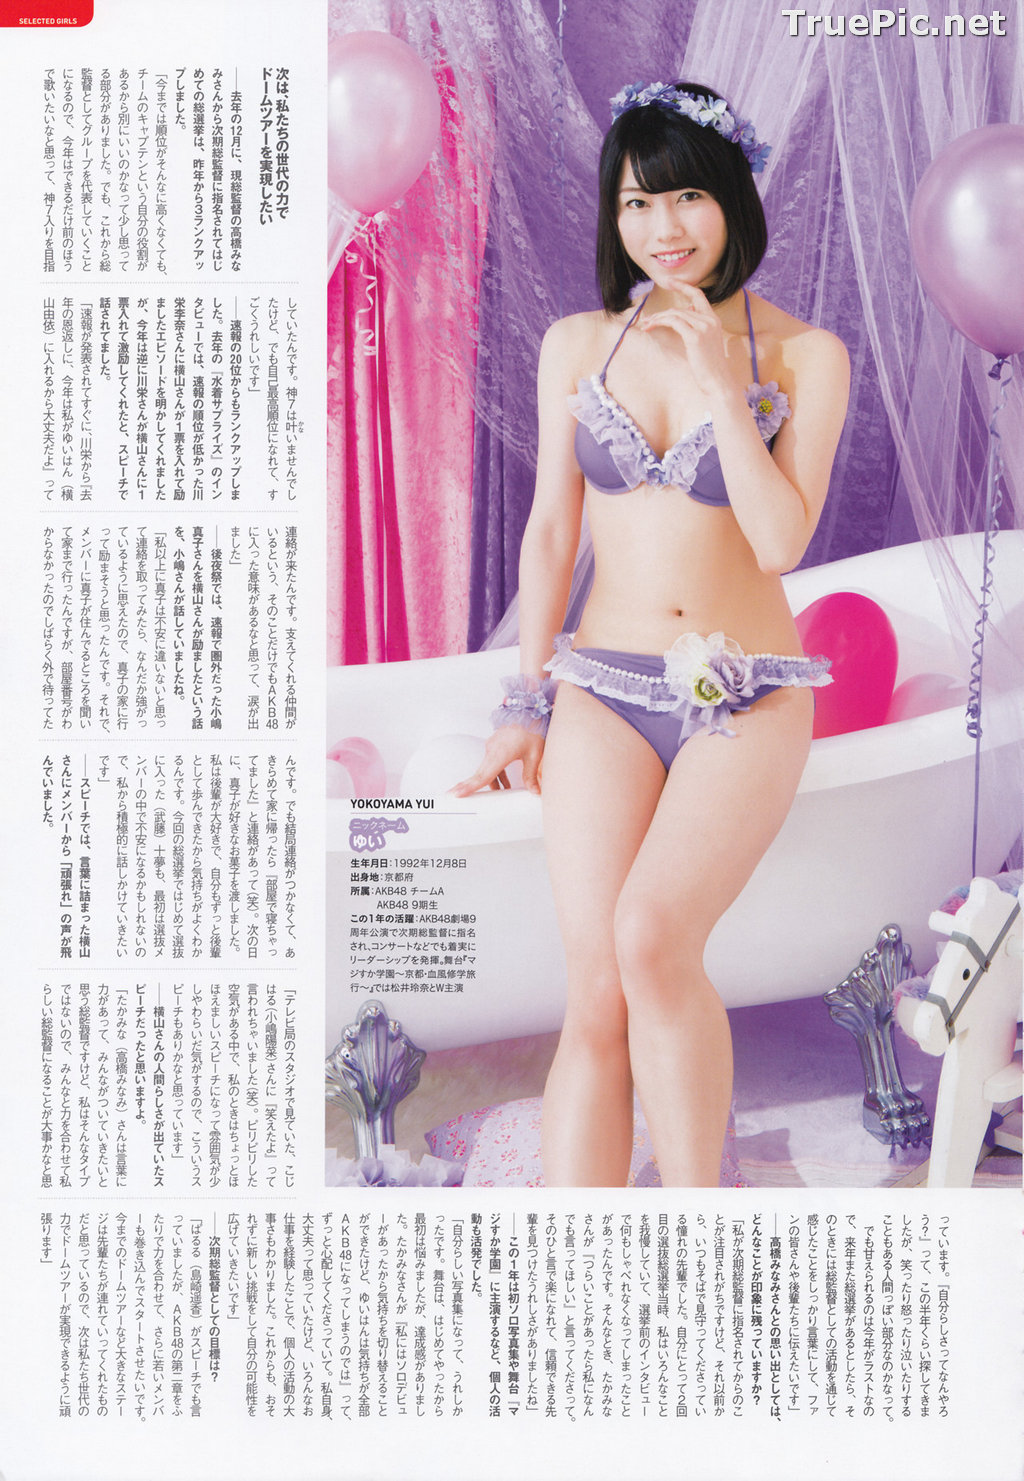 Image AKB48 General Election! Swimsuit Surprise Announcement 2015 - TruePic.net - Picture-33